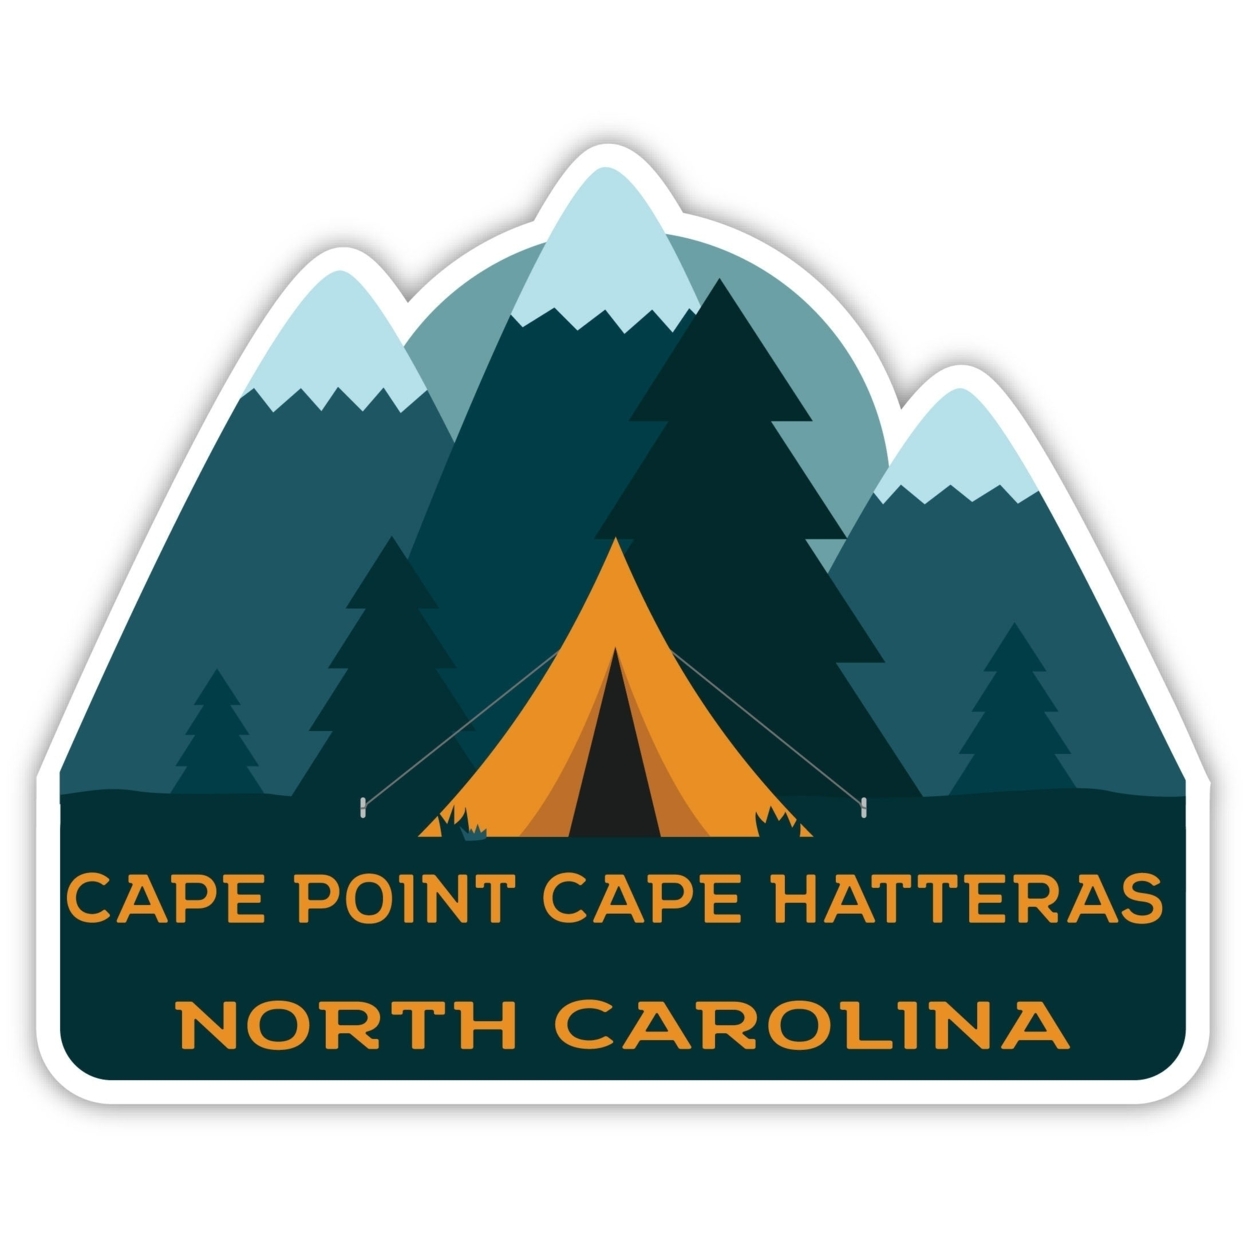 Cape Point Cape Hatteras North Carolina Souvenir Decorative Stickers (Choose Theme And Size) - Single Unit, 4-Inch, Tent